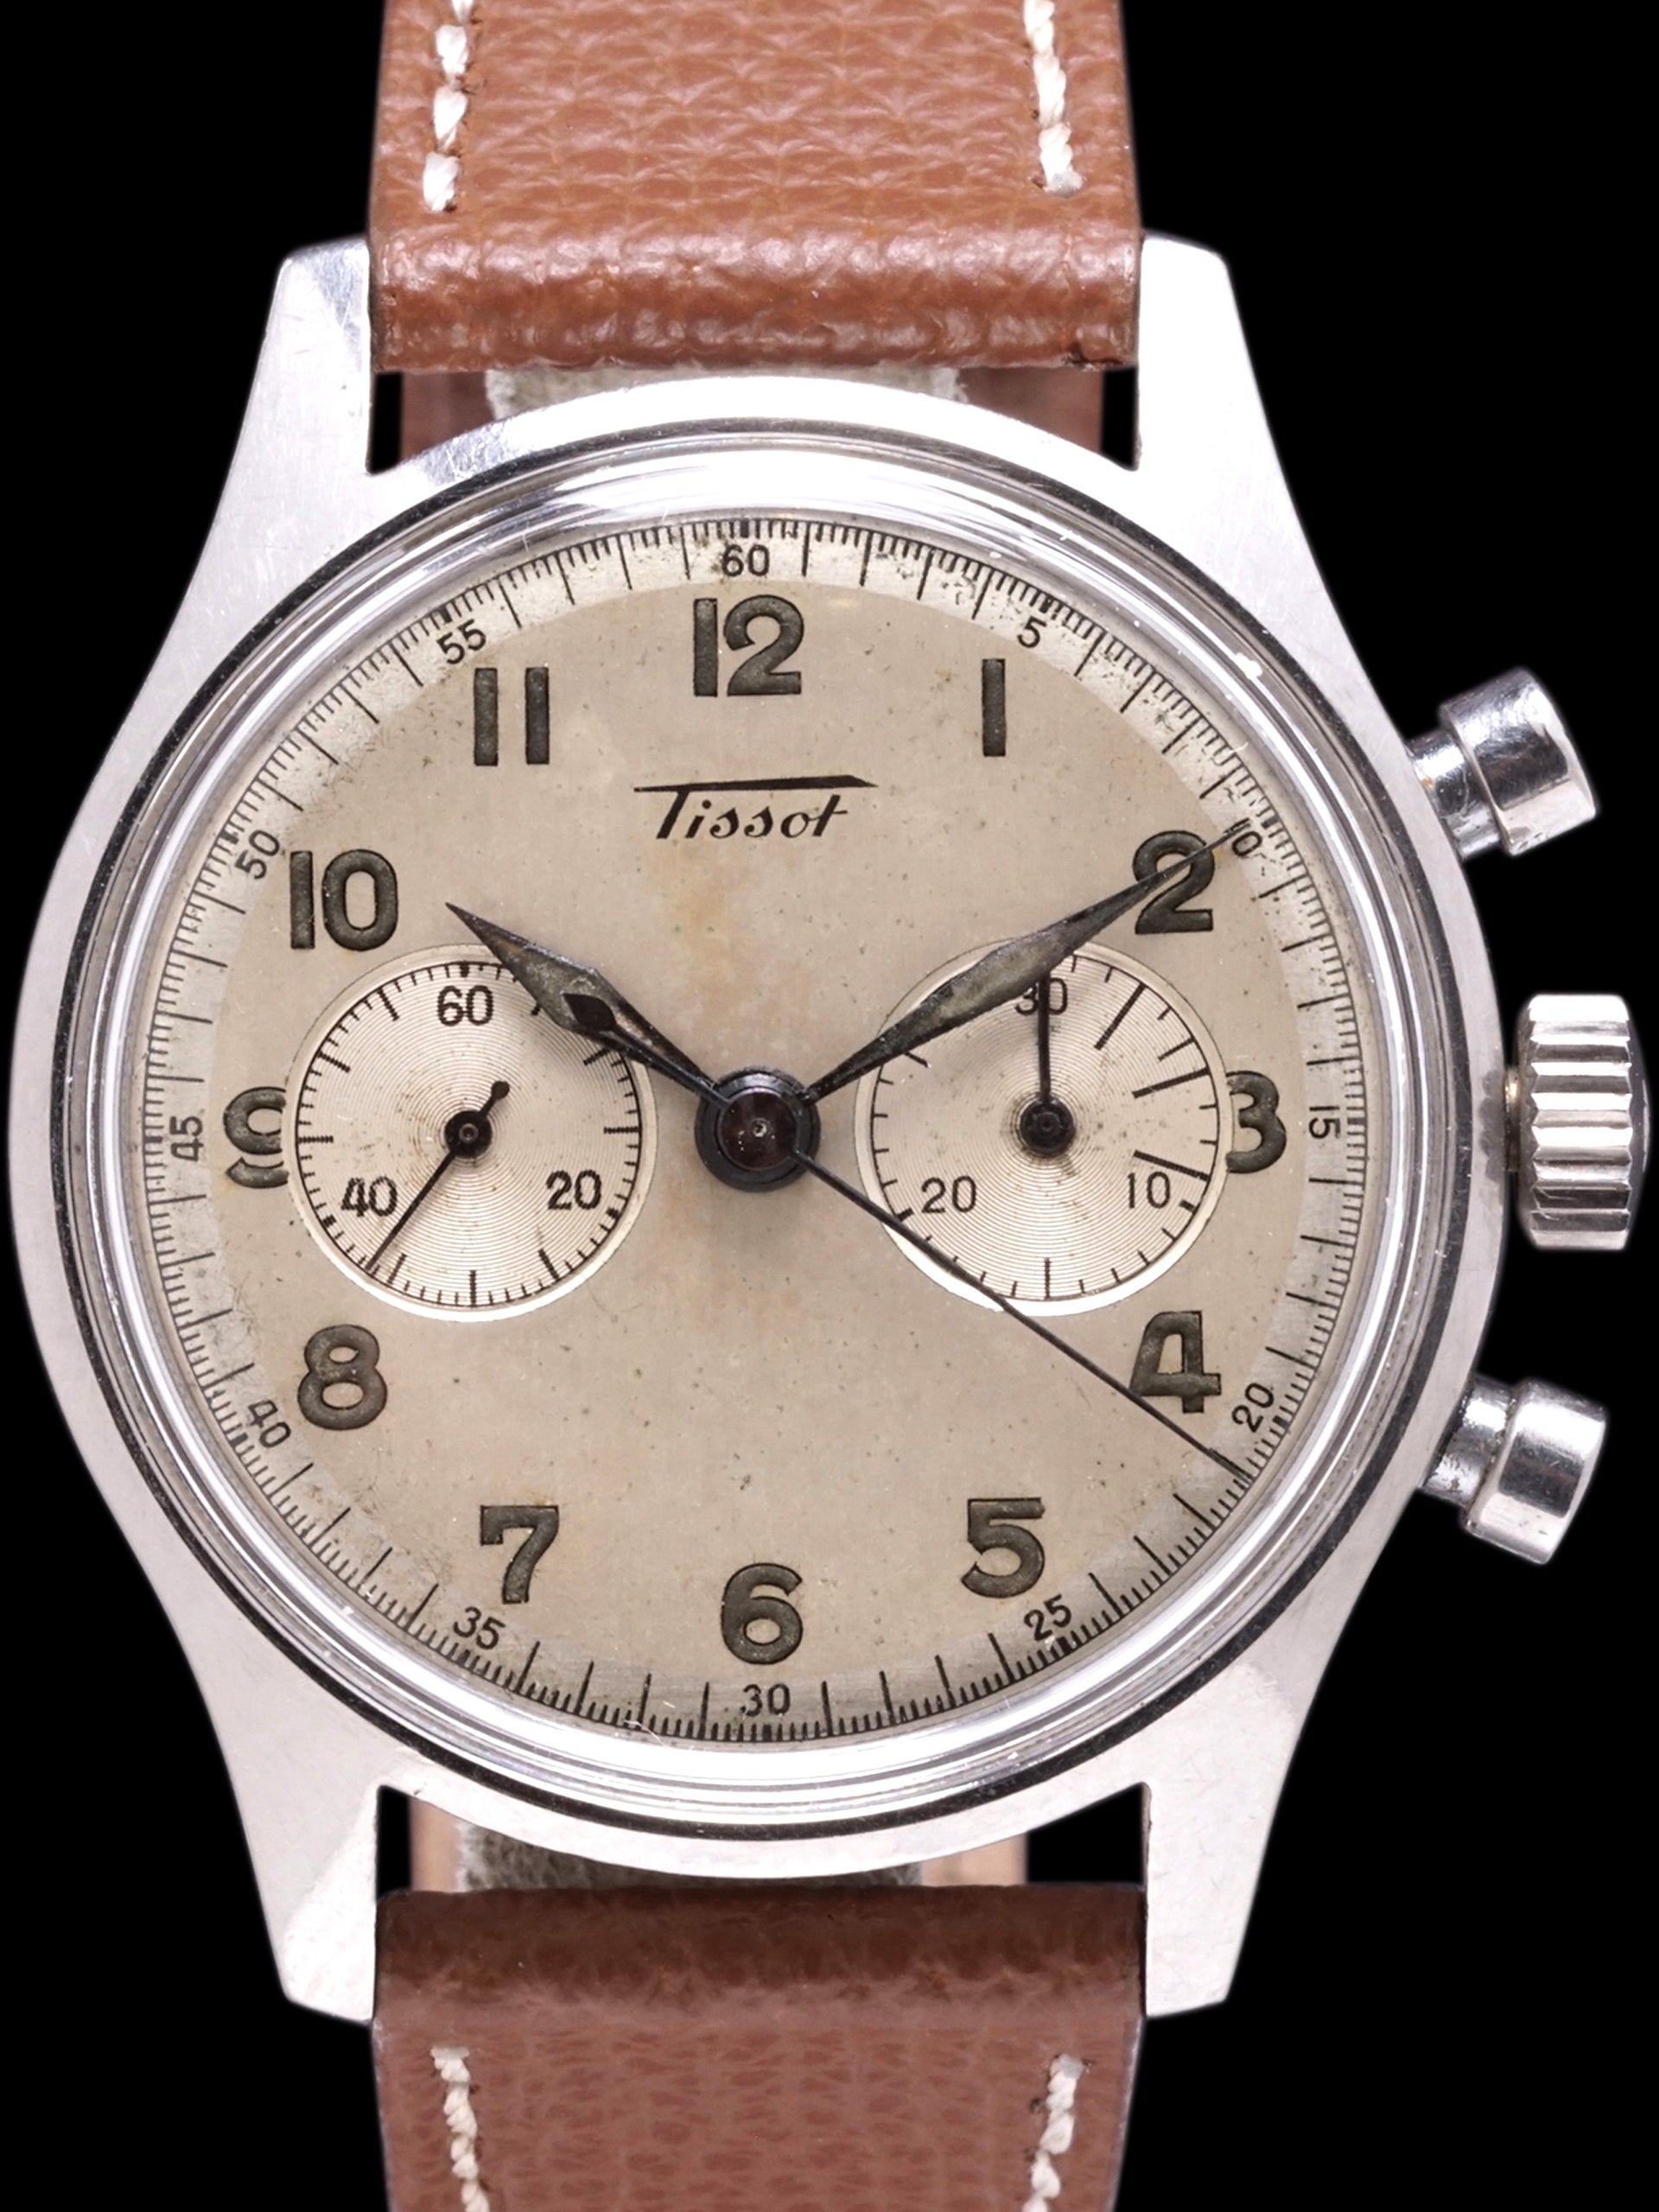 1950s Tissot Chronograph (Ref. 6220-4)